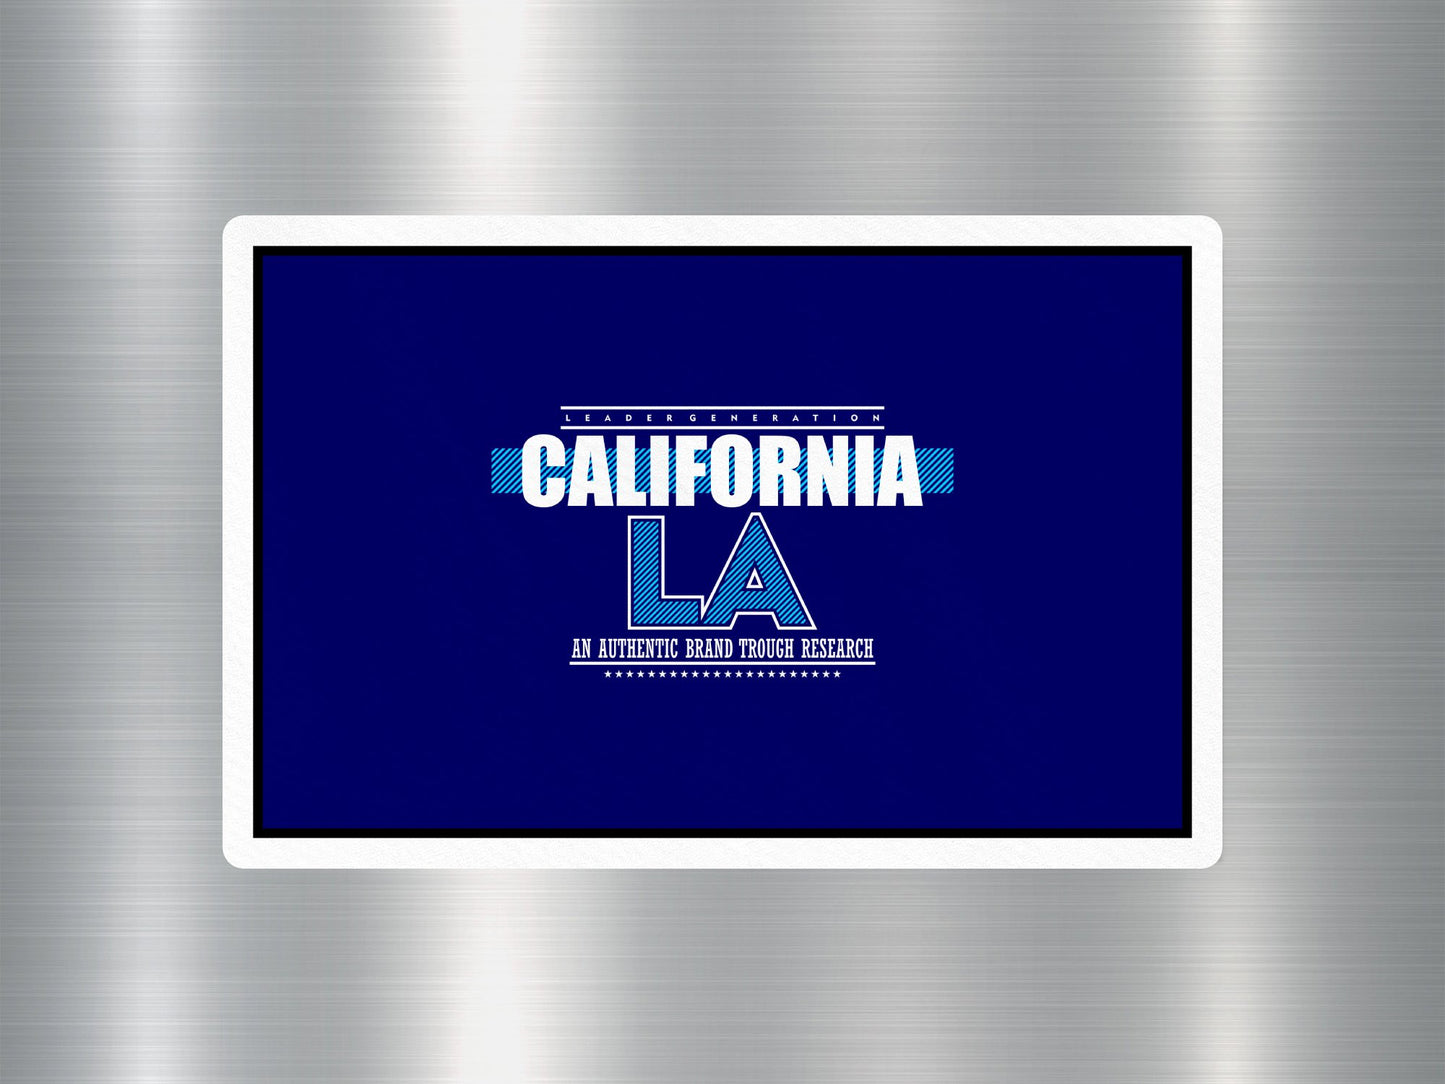 California Travel Sticker